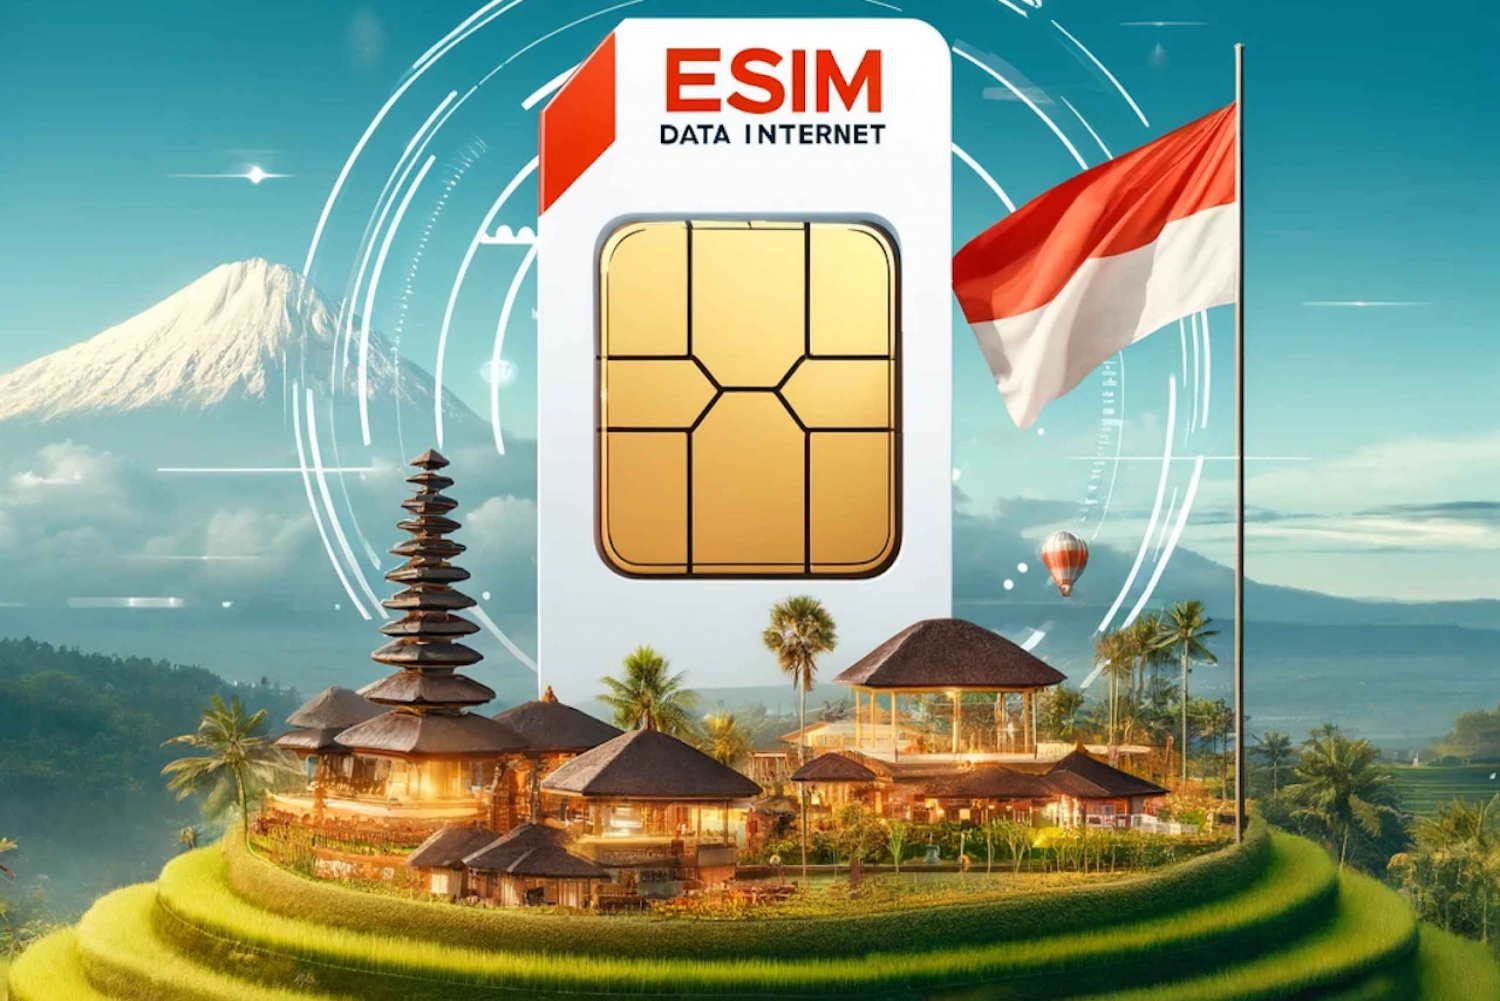 Indonesia: eSIM Internet Data Plan for 4G/5G